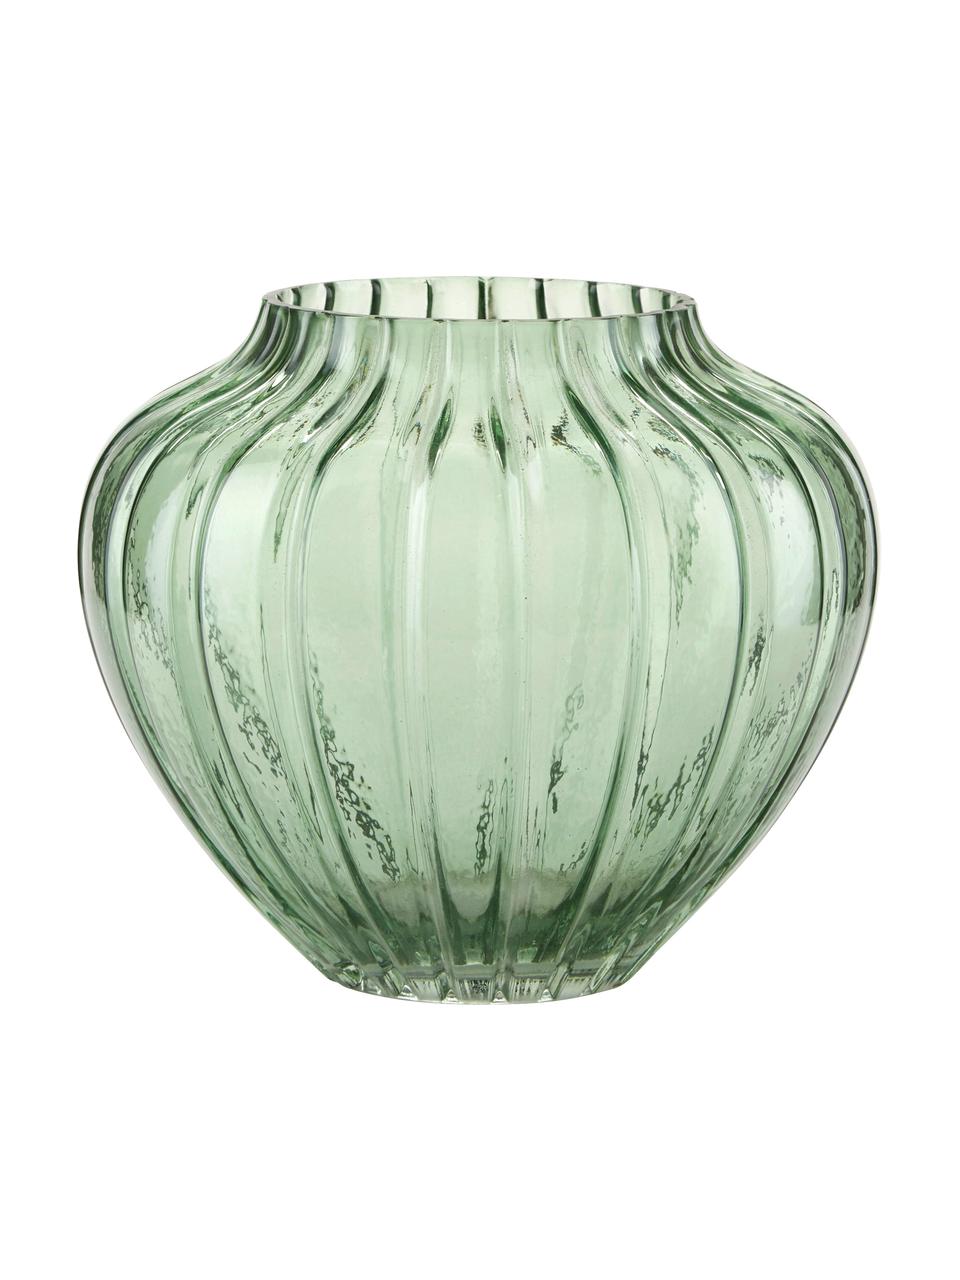 Glazen vaas Groove in groen, Glas, Groen, Ø 20 x H 18 cm